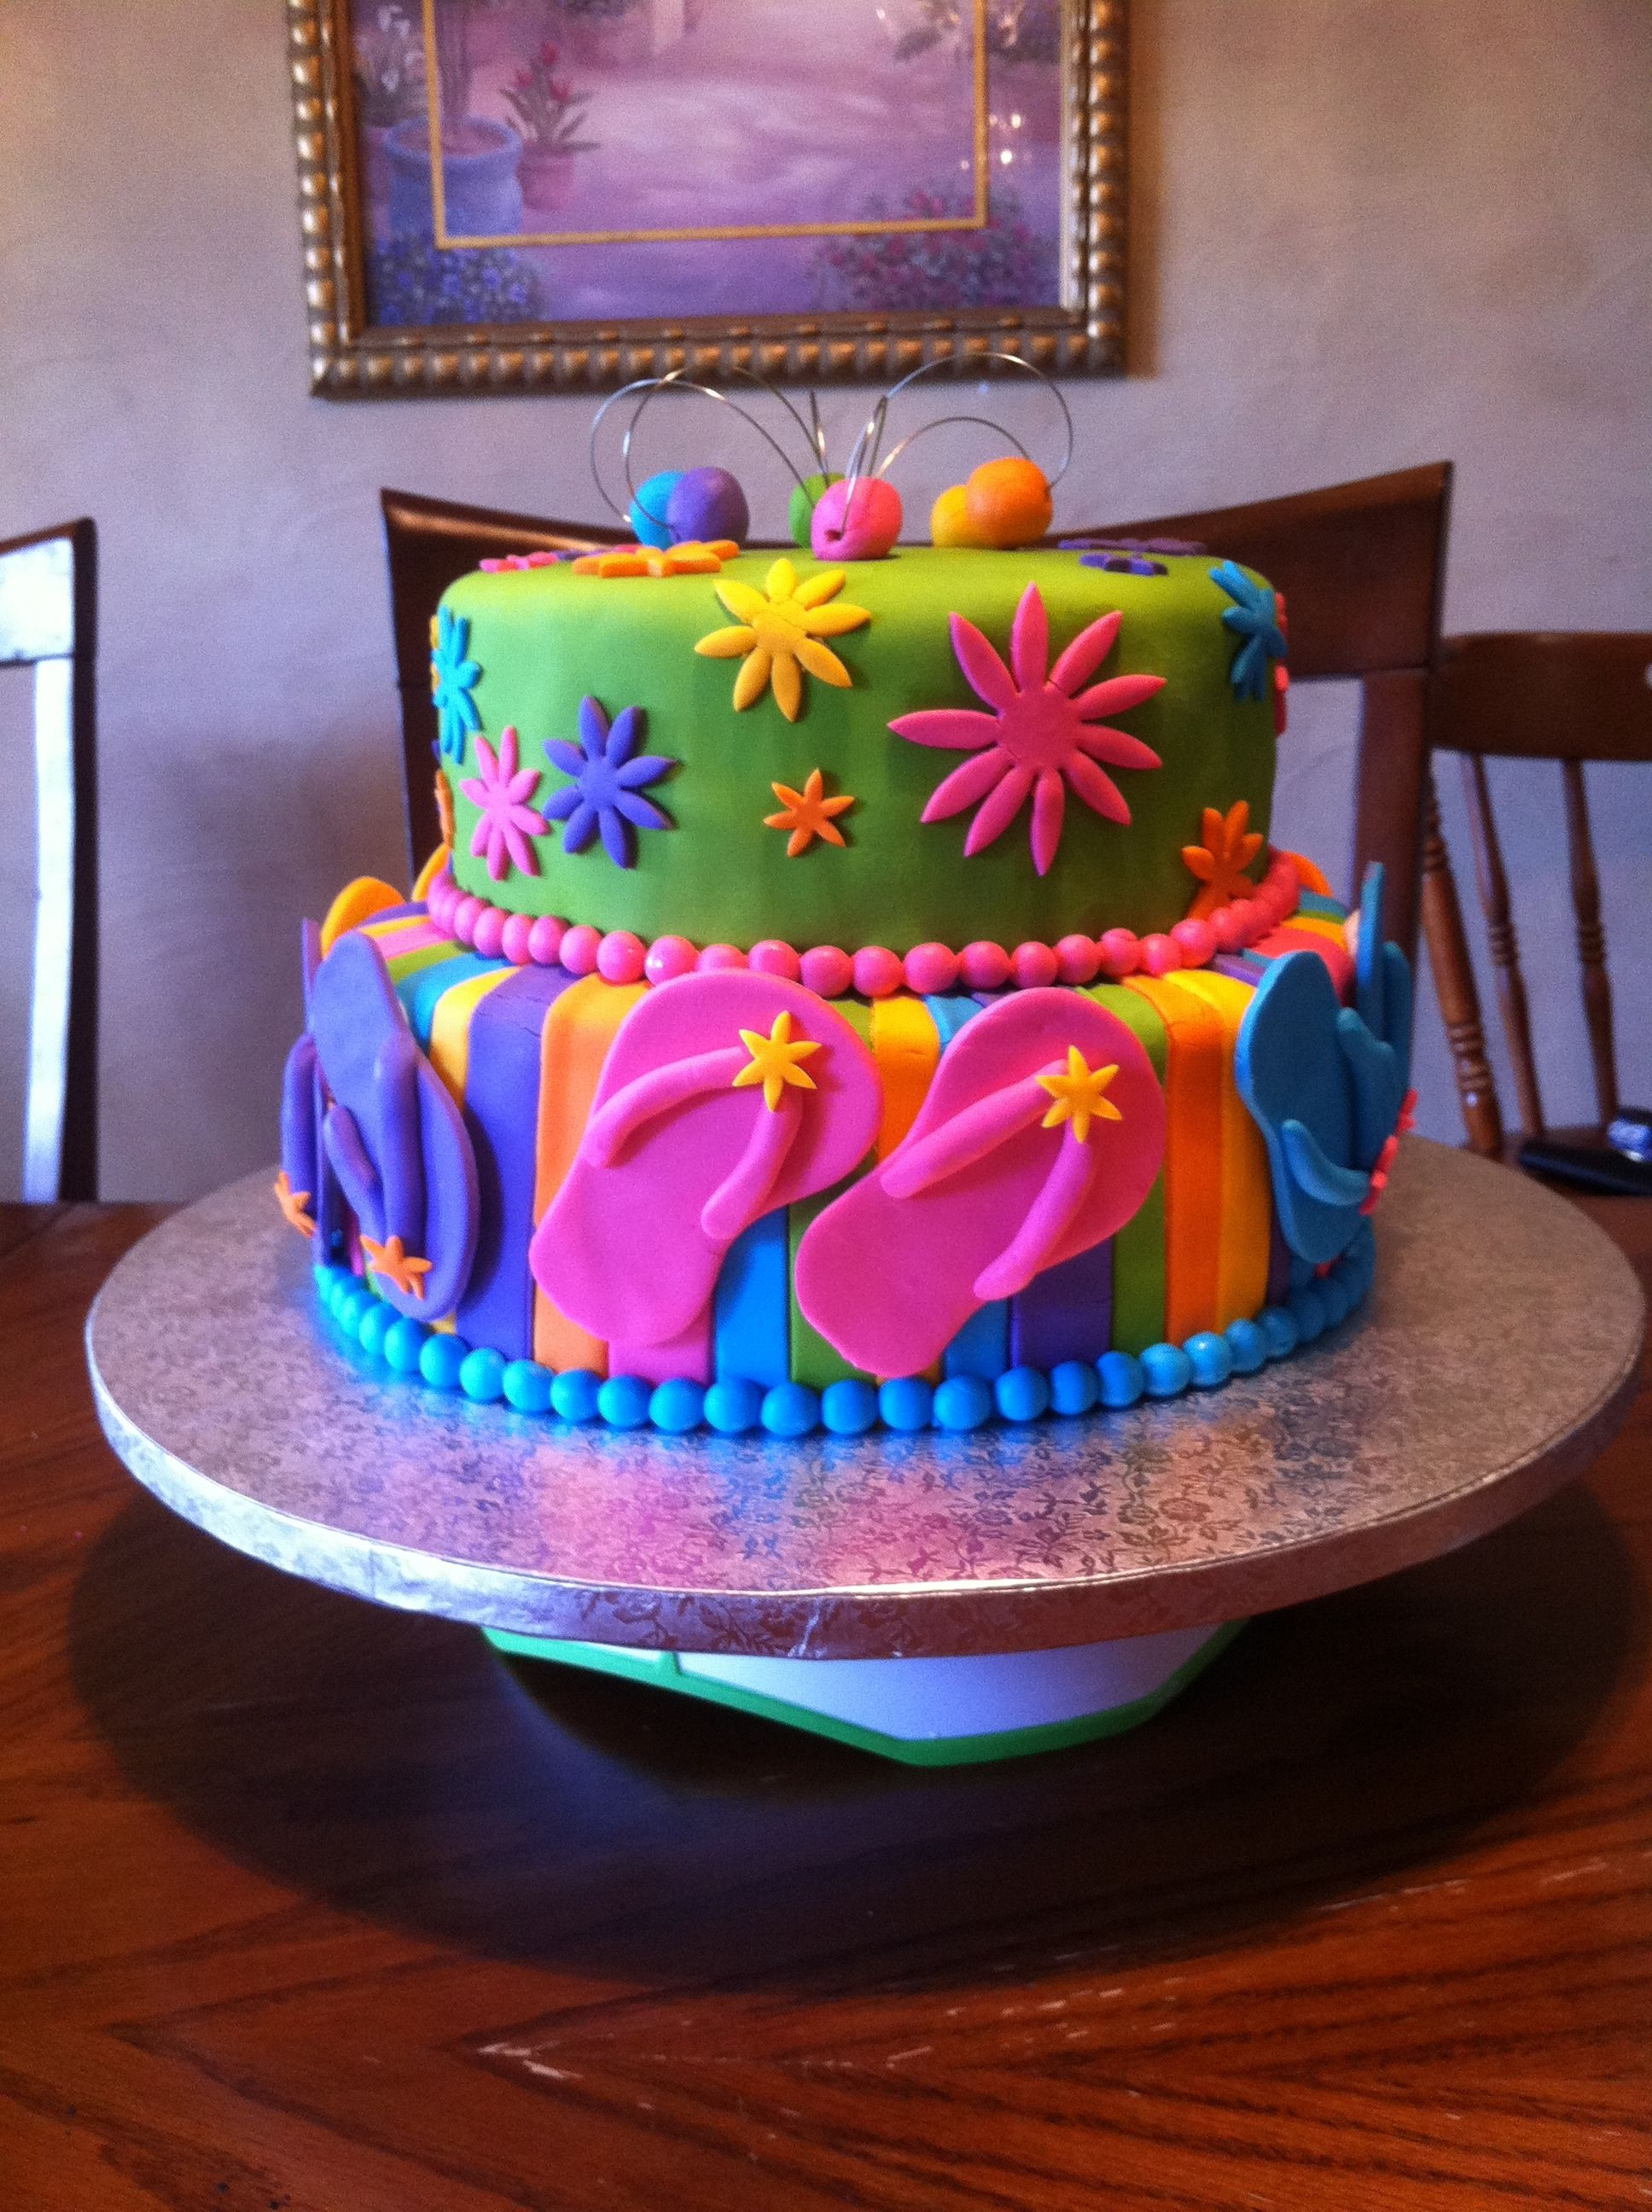 Summer Birthday Cake Ideas
 Flip Flop Cake Fun summer birthday cake with flip flops